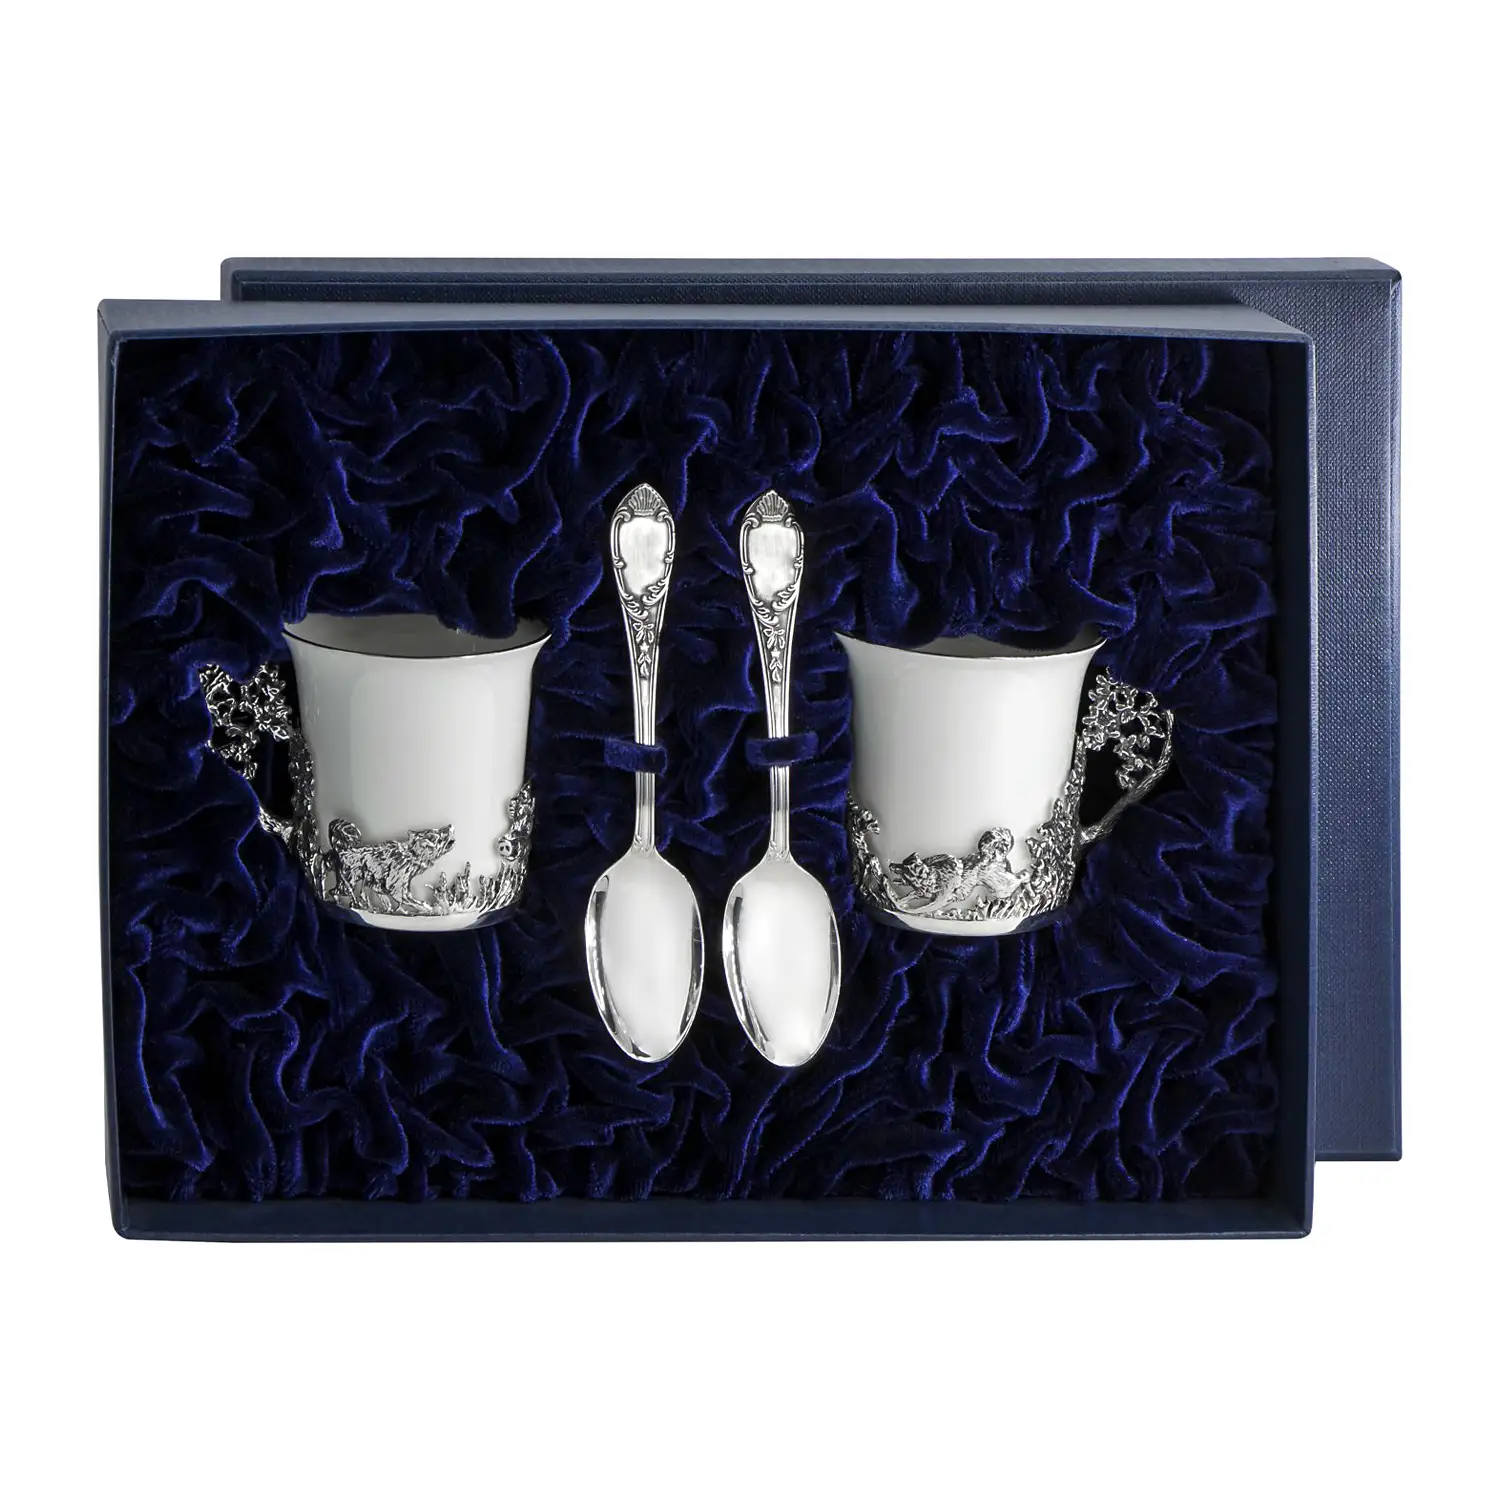 Набор кофейных чашек Кабан: ложка, чашка (Серебро 925) набор кофейных чашек богема серебро 925